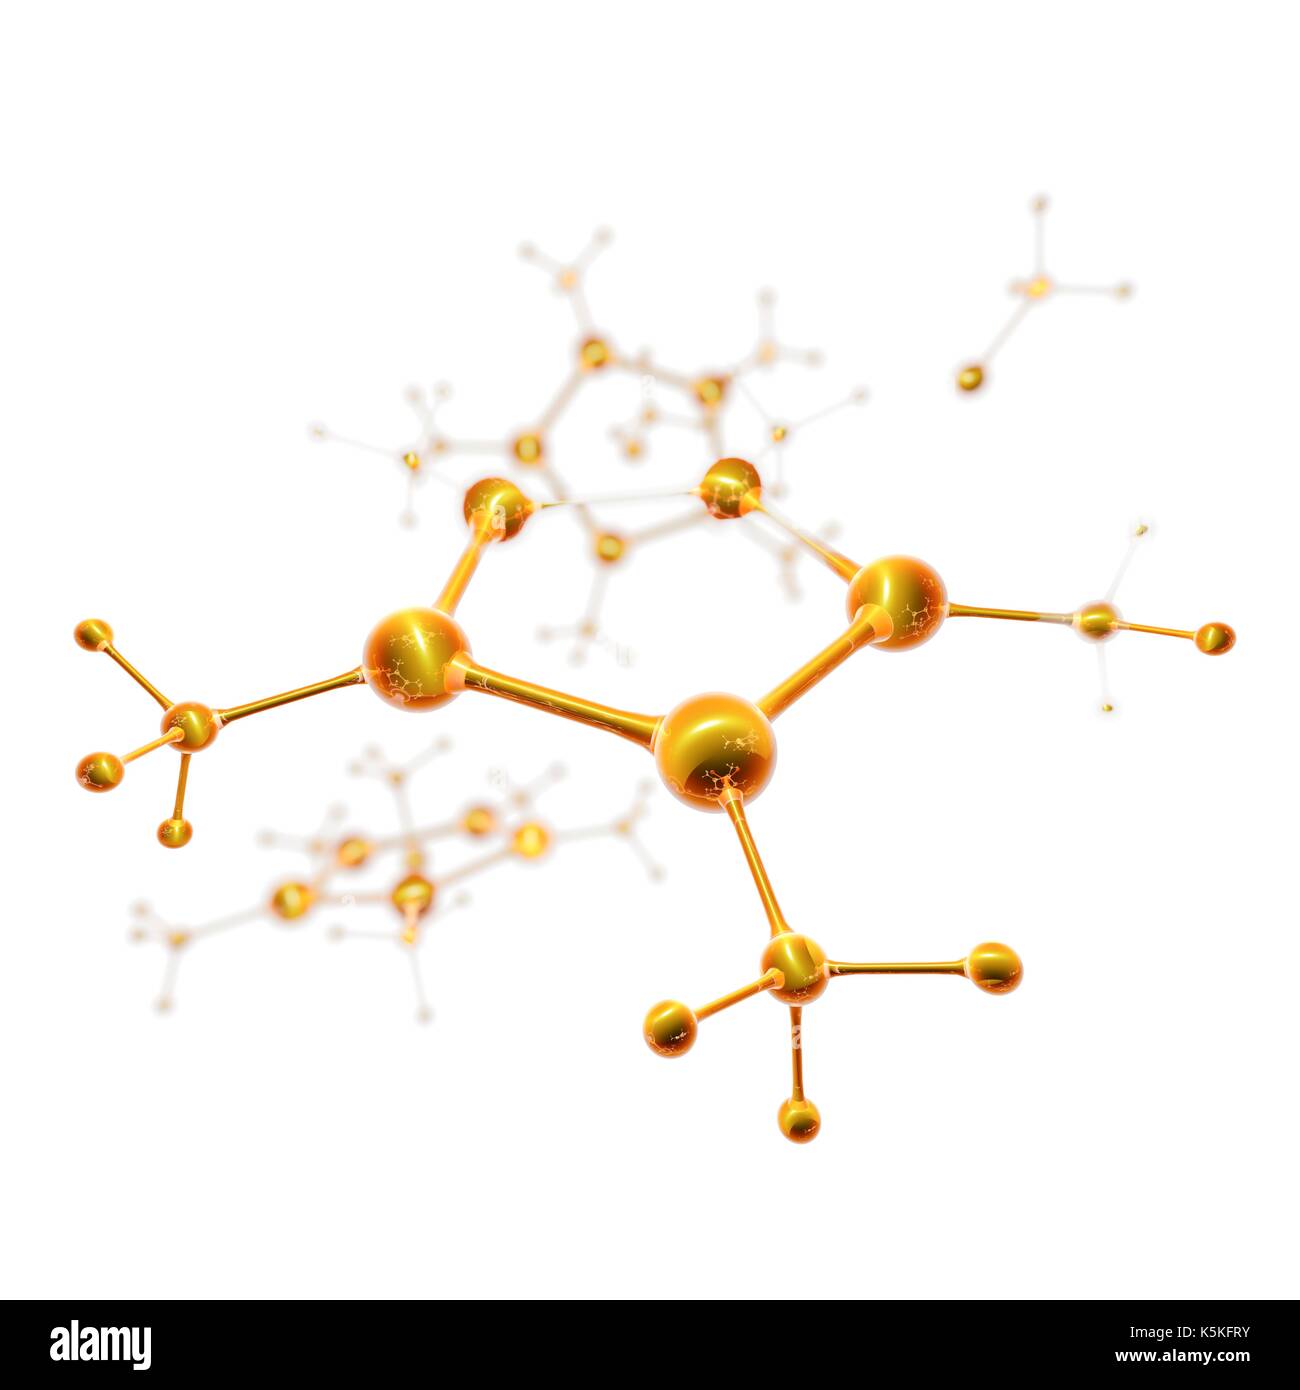 Abstract molecule model, illustration. Stock Photo